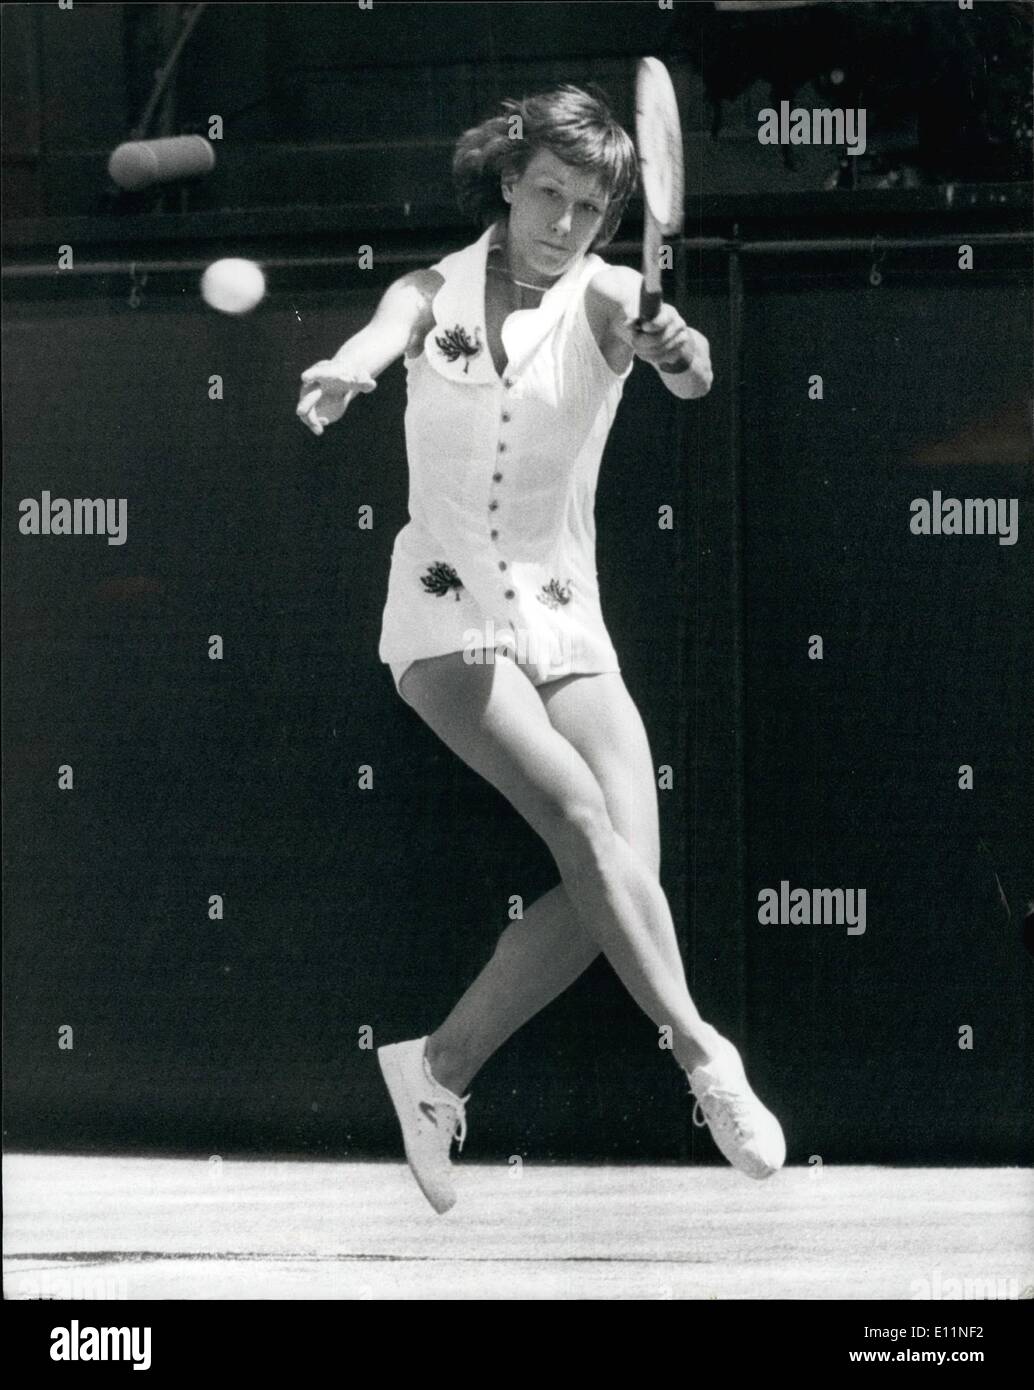 7. Juli 1979 - schlagen Navratilova Chris Lloyd im Damen Einzel Finale in Wimbledon 6-4 6-4. Foto zeigt: Martina Navratilova Stockfoto